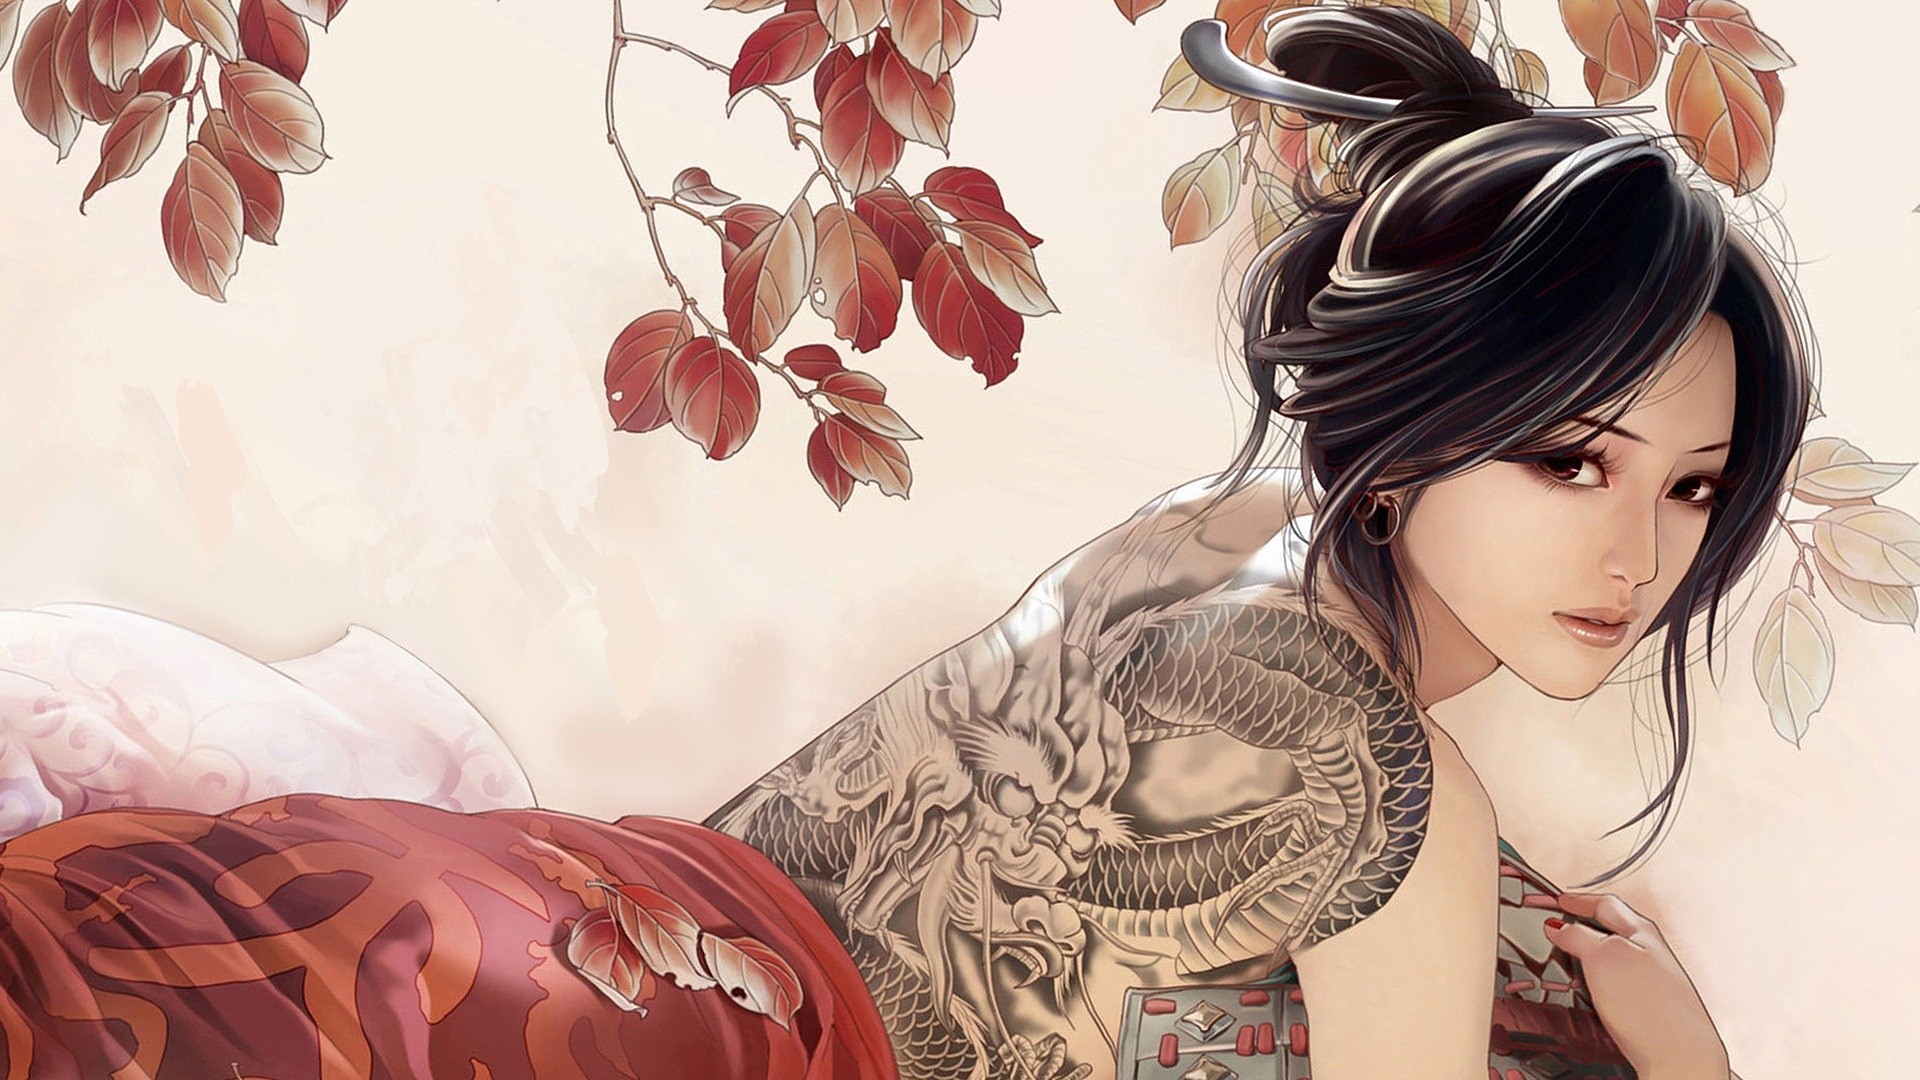 Anime Female Samurai Poster by Finn Vidtak  Displate